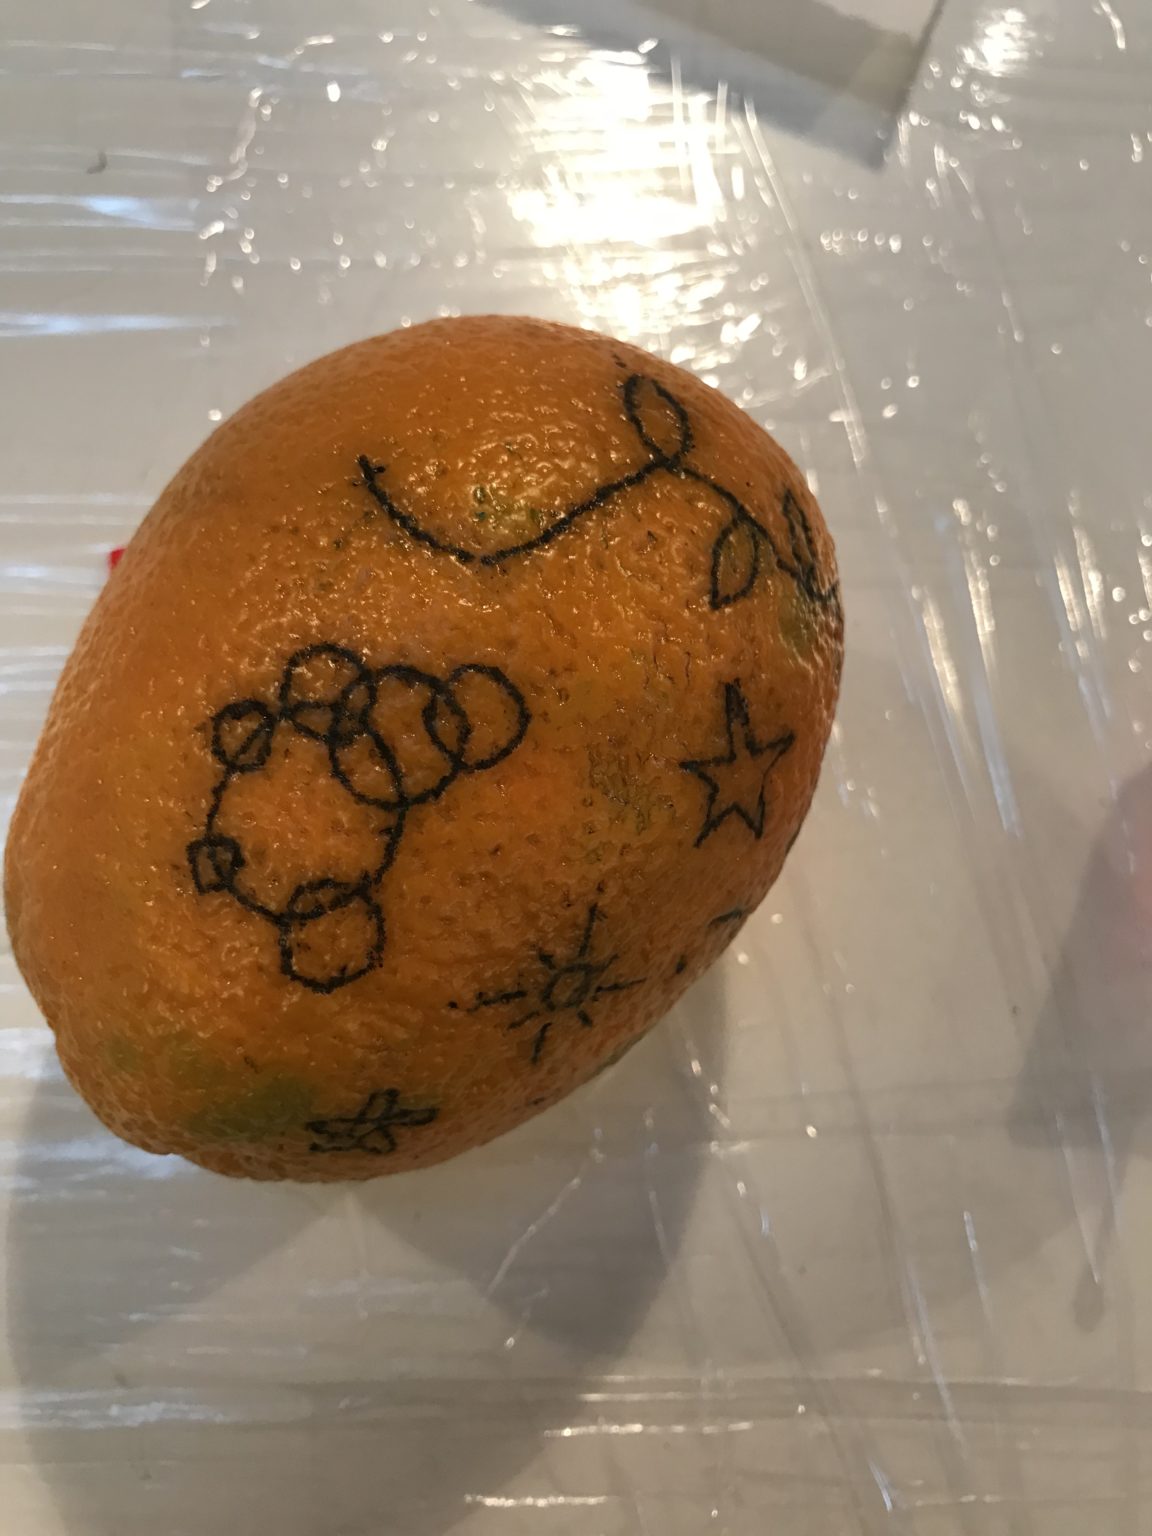 Tattooed artwork on an orange